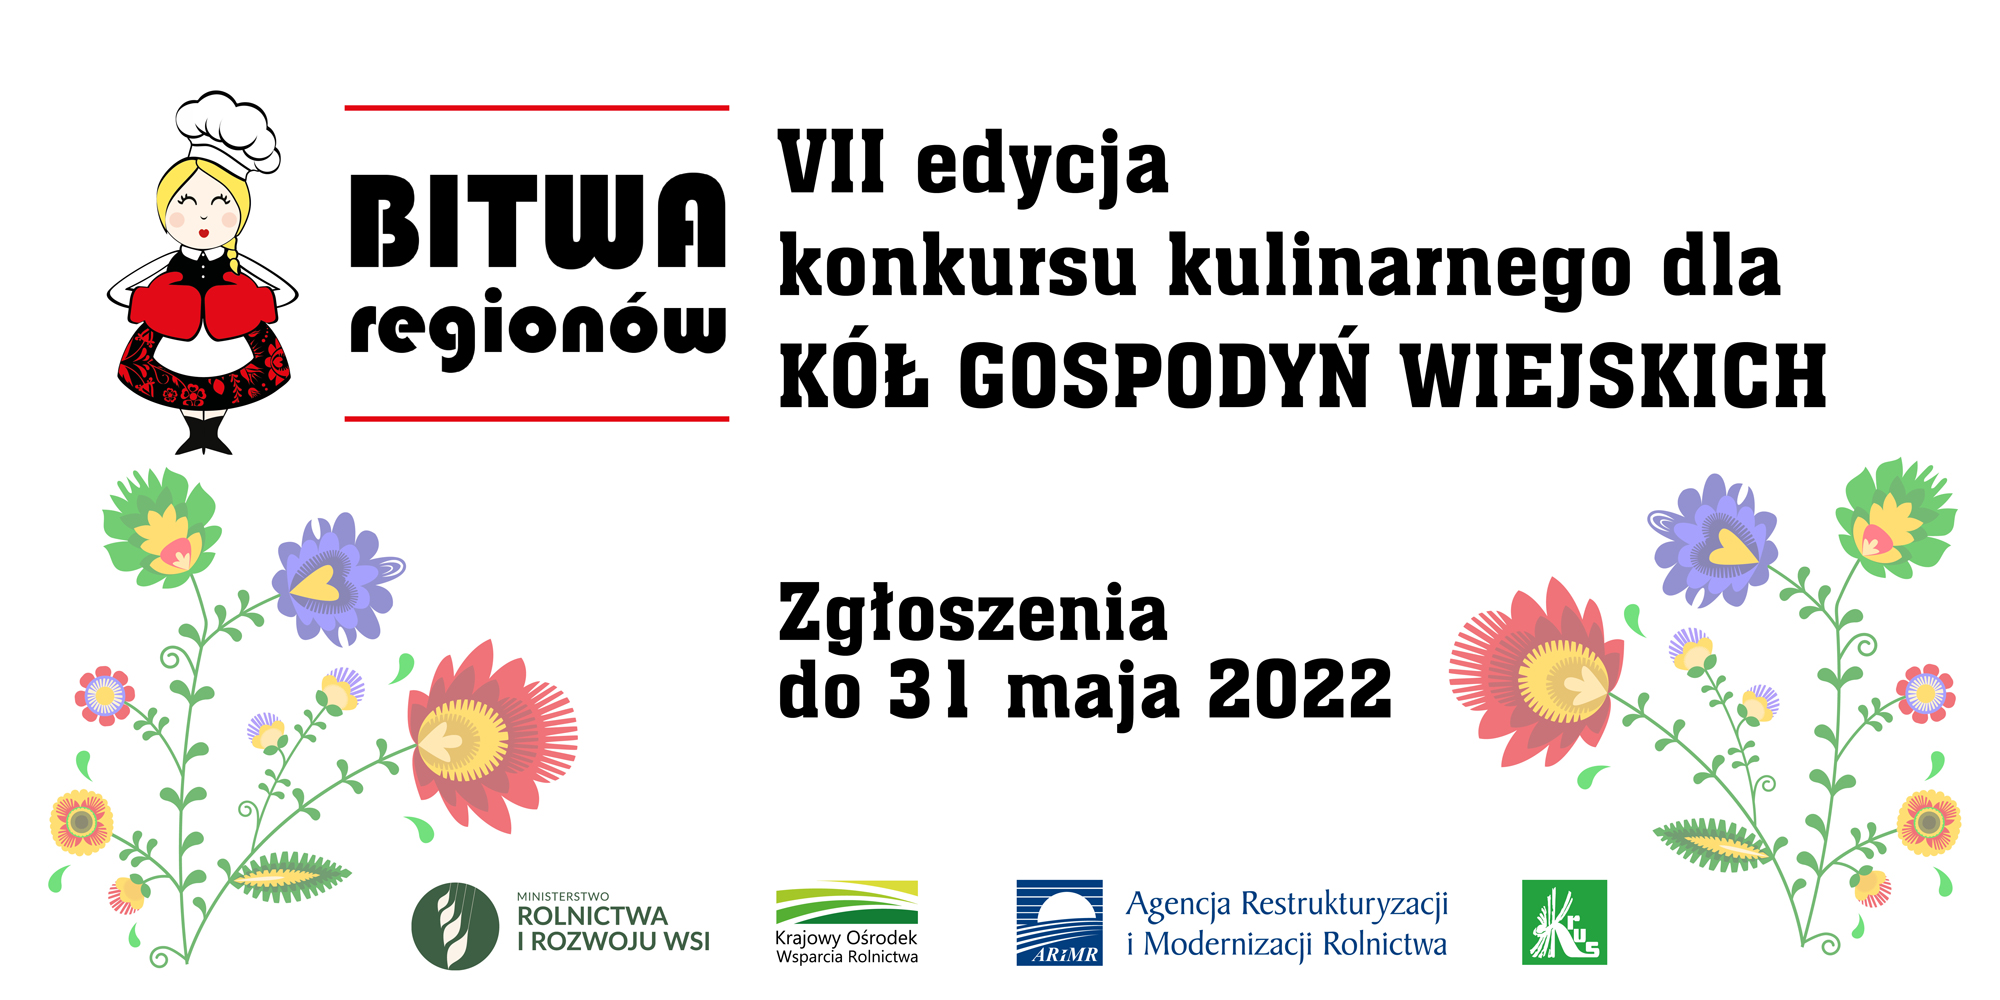 BITWA REGIONOW 2022